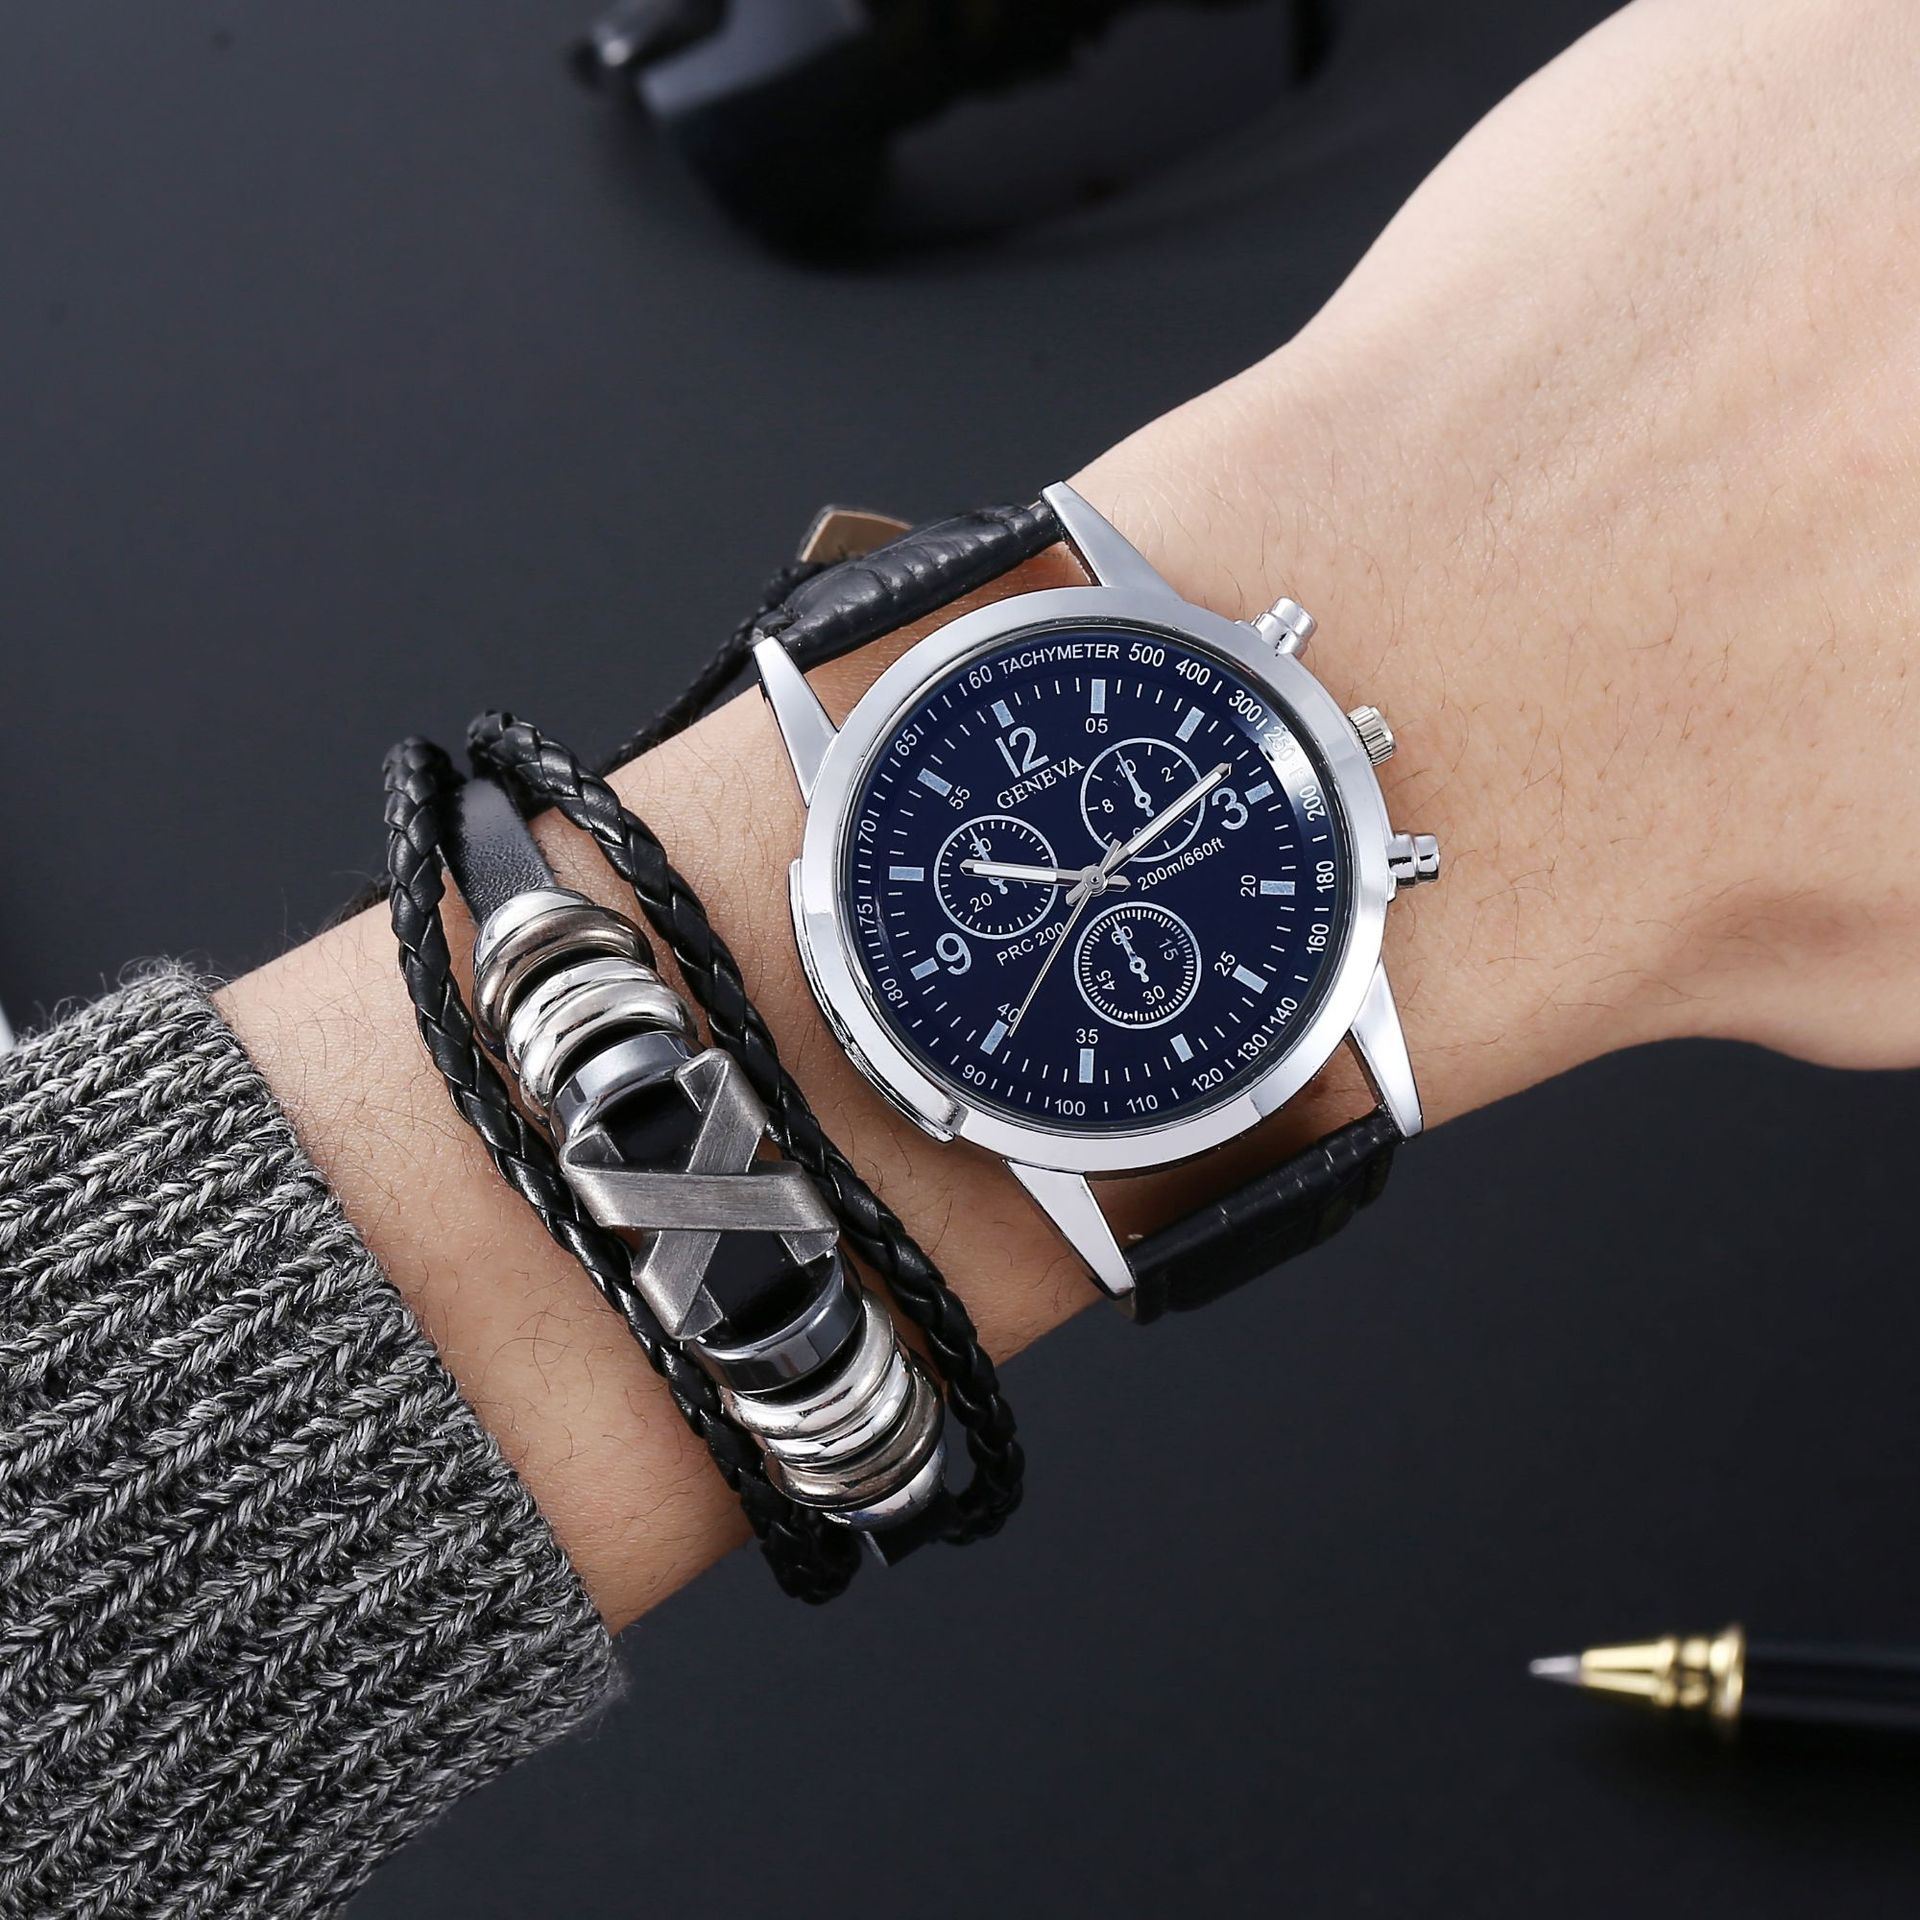 A watch and bracelet